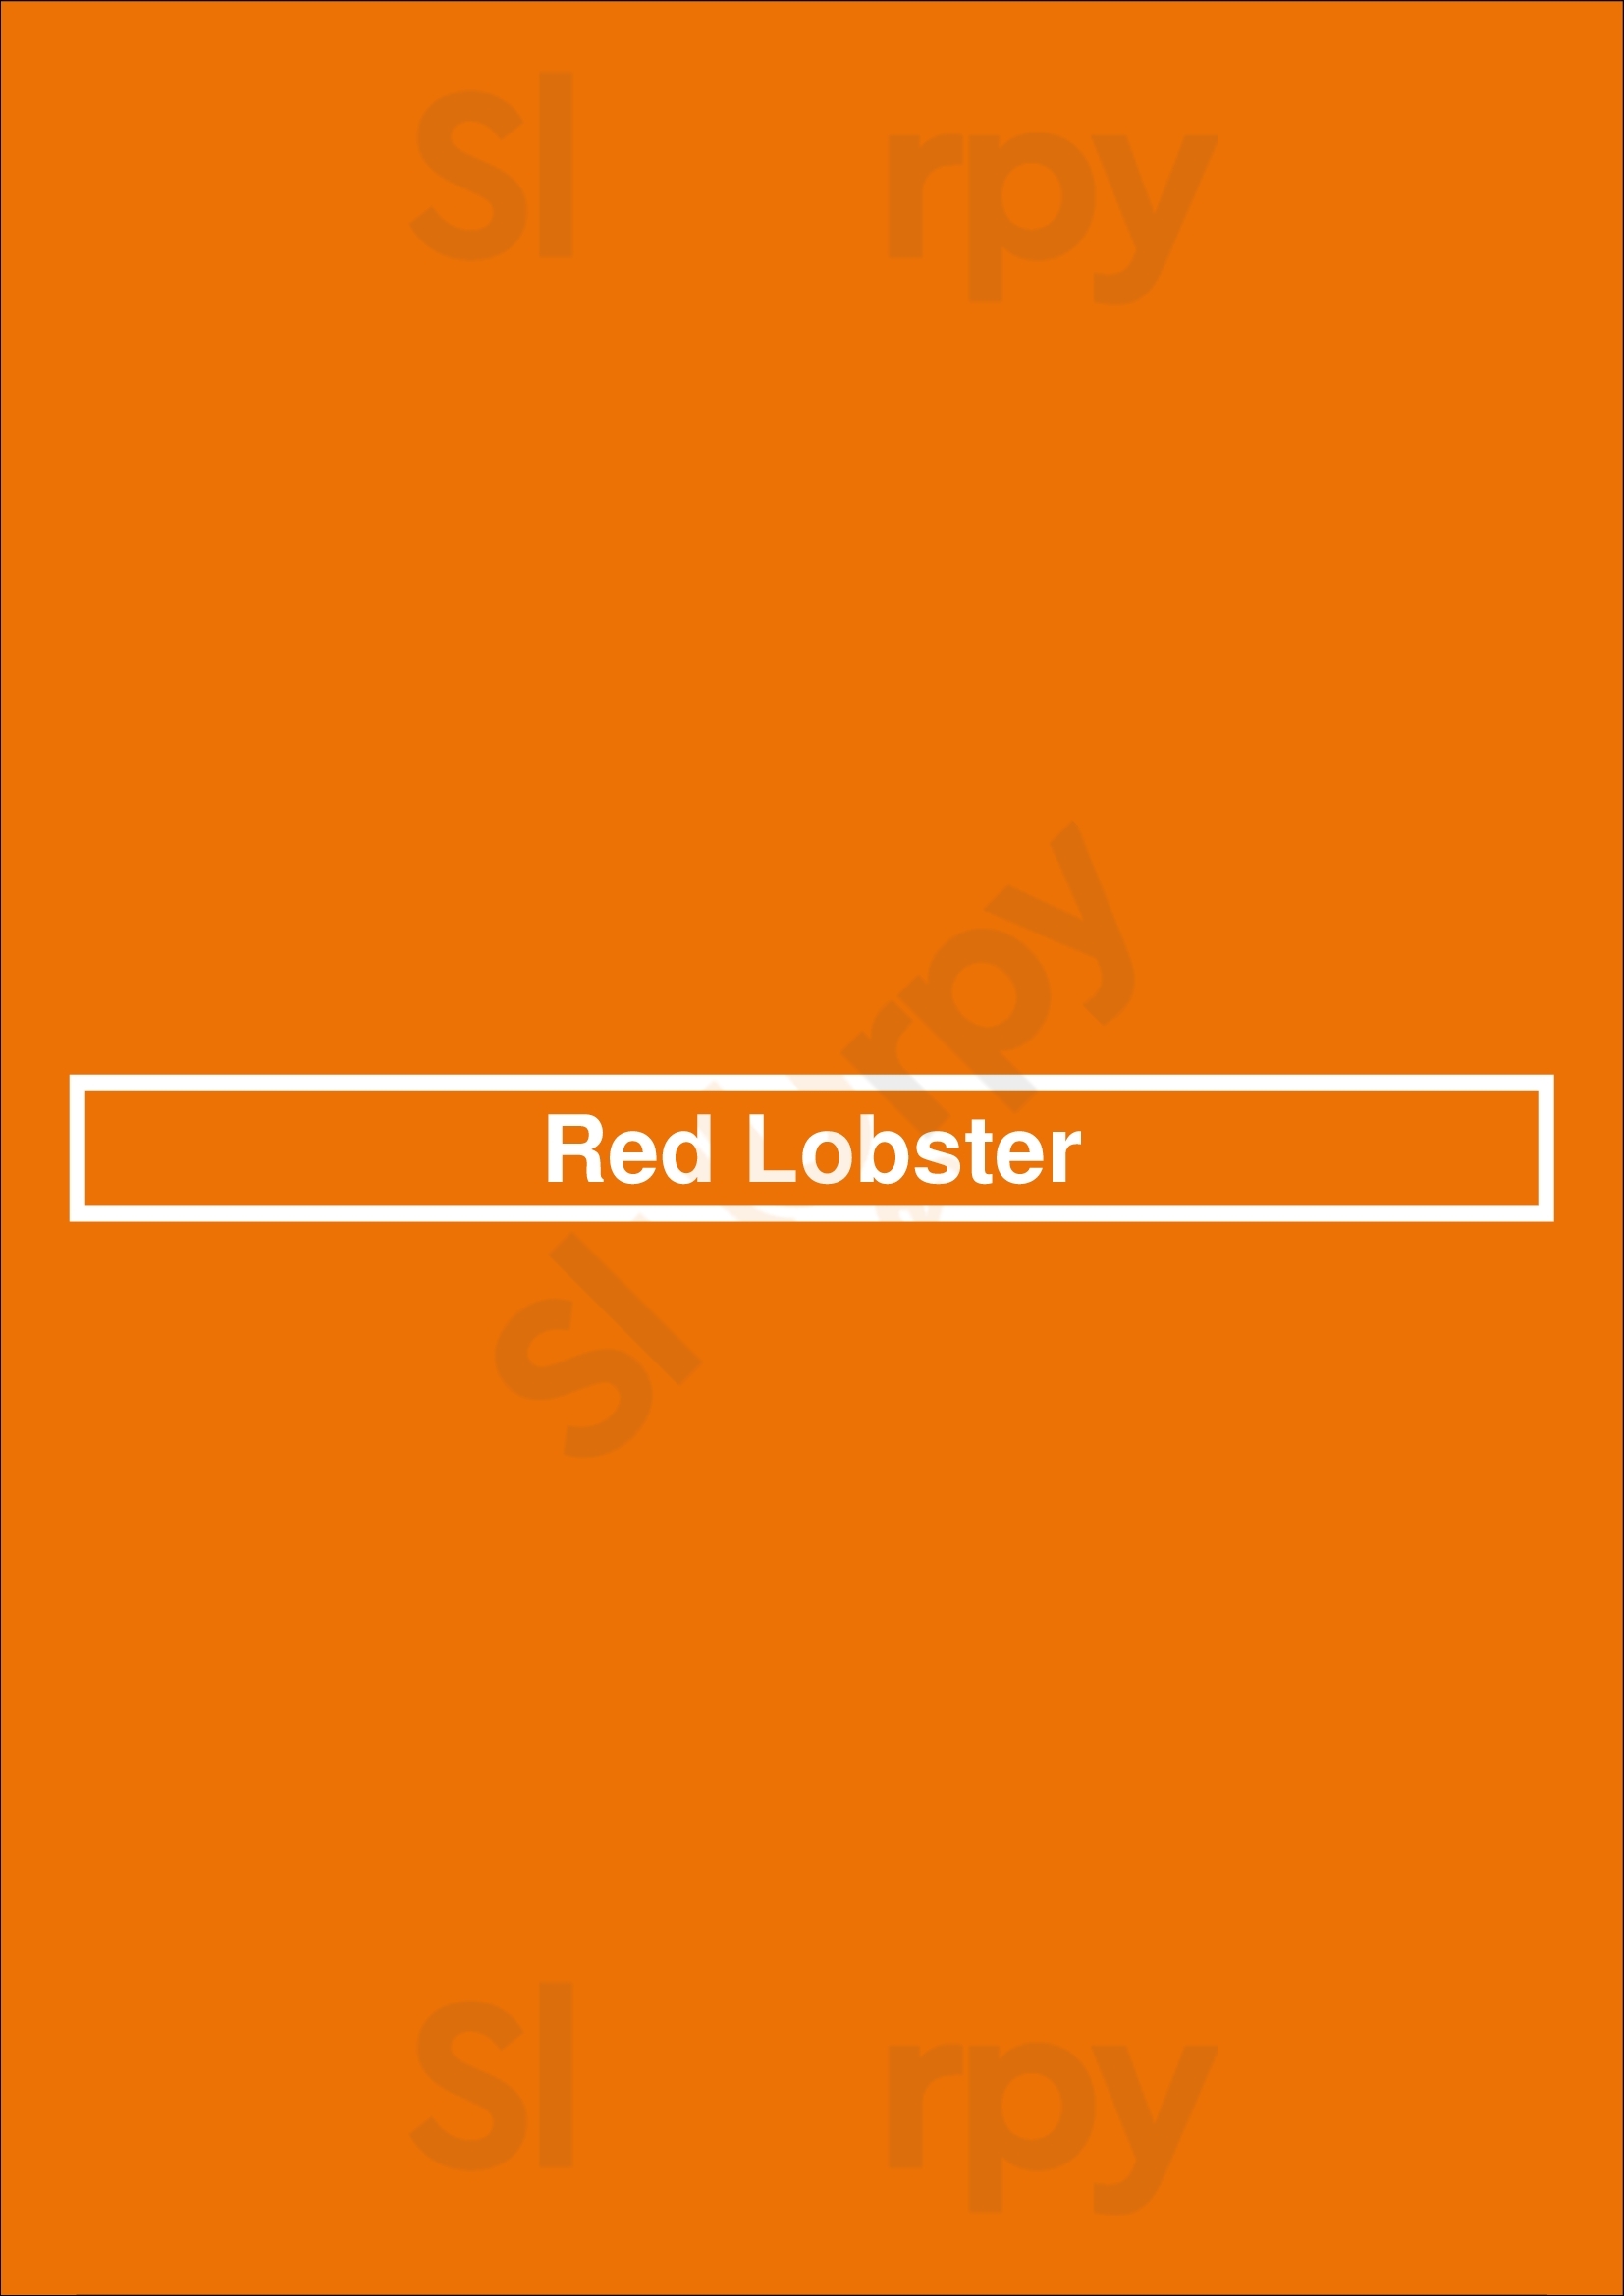 Red Lobster Springfield Menu - 1